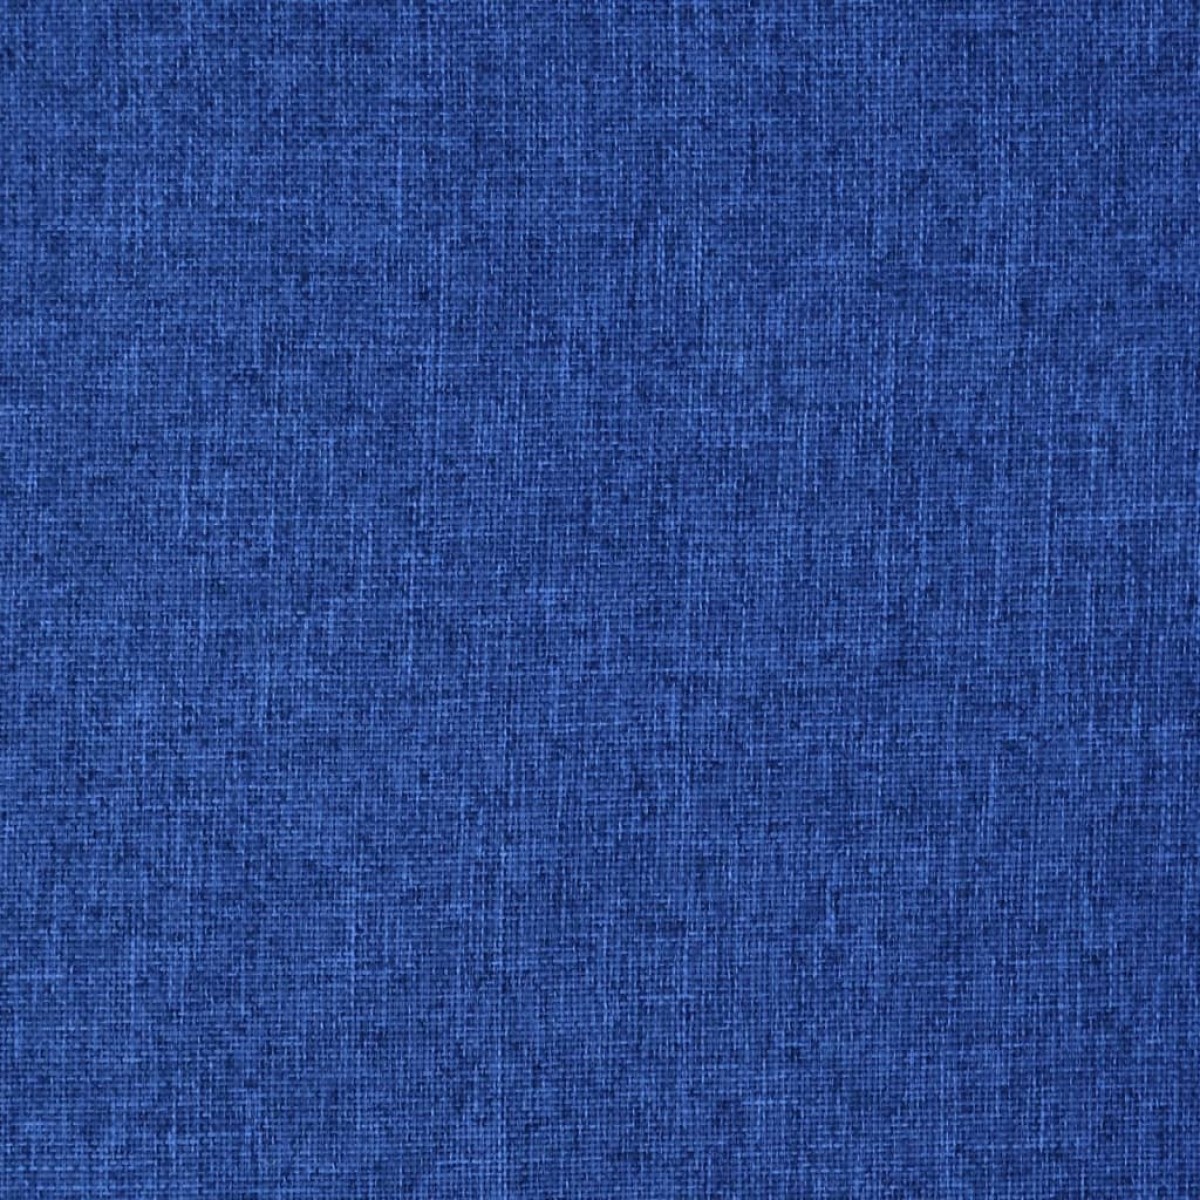 vidaXL Πολυθρόνα - Κρεβάτι Δαπέδου Πτυσσόμενη Μπλε Υφασμάτινη